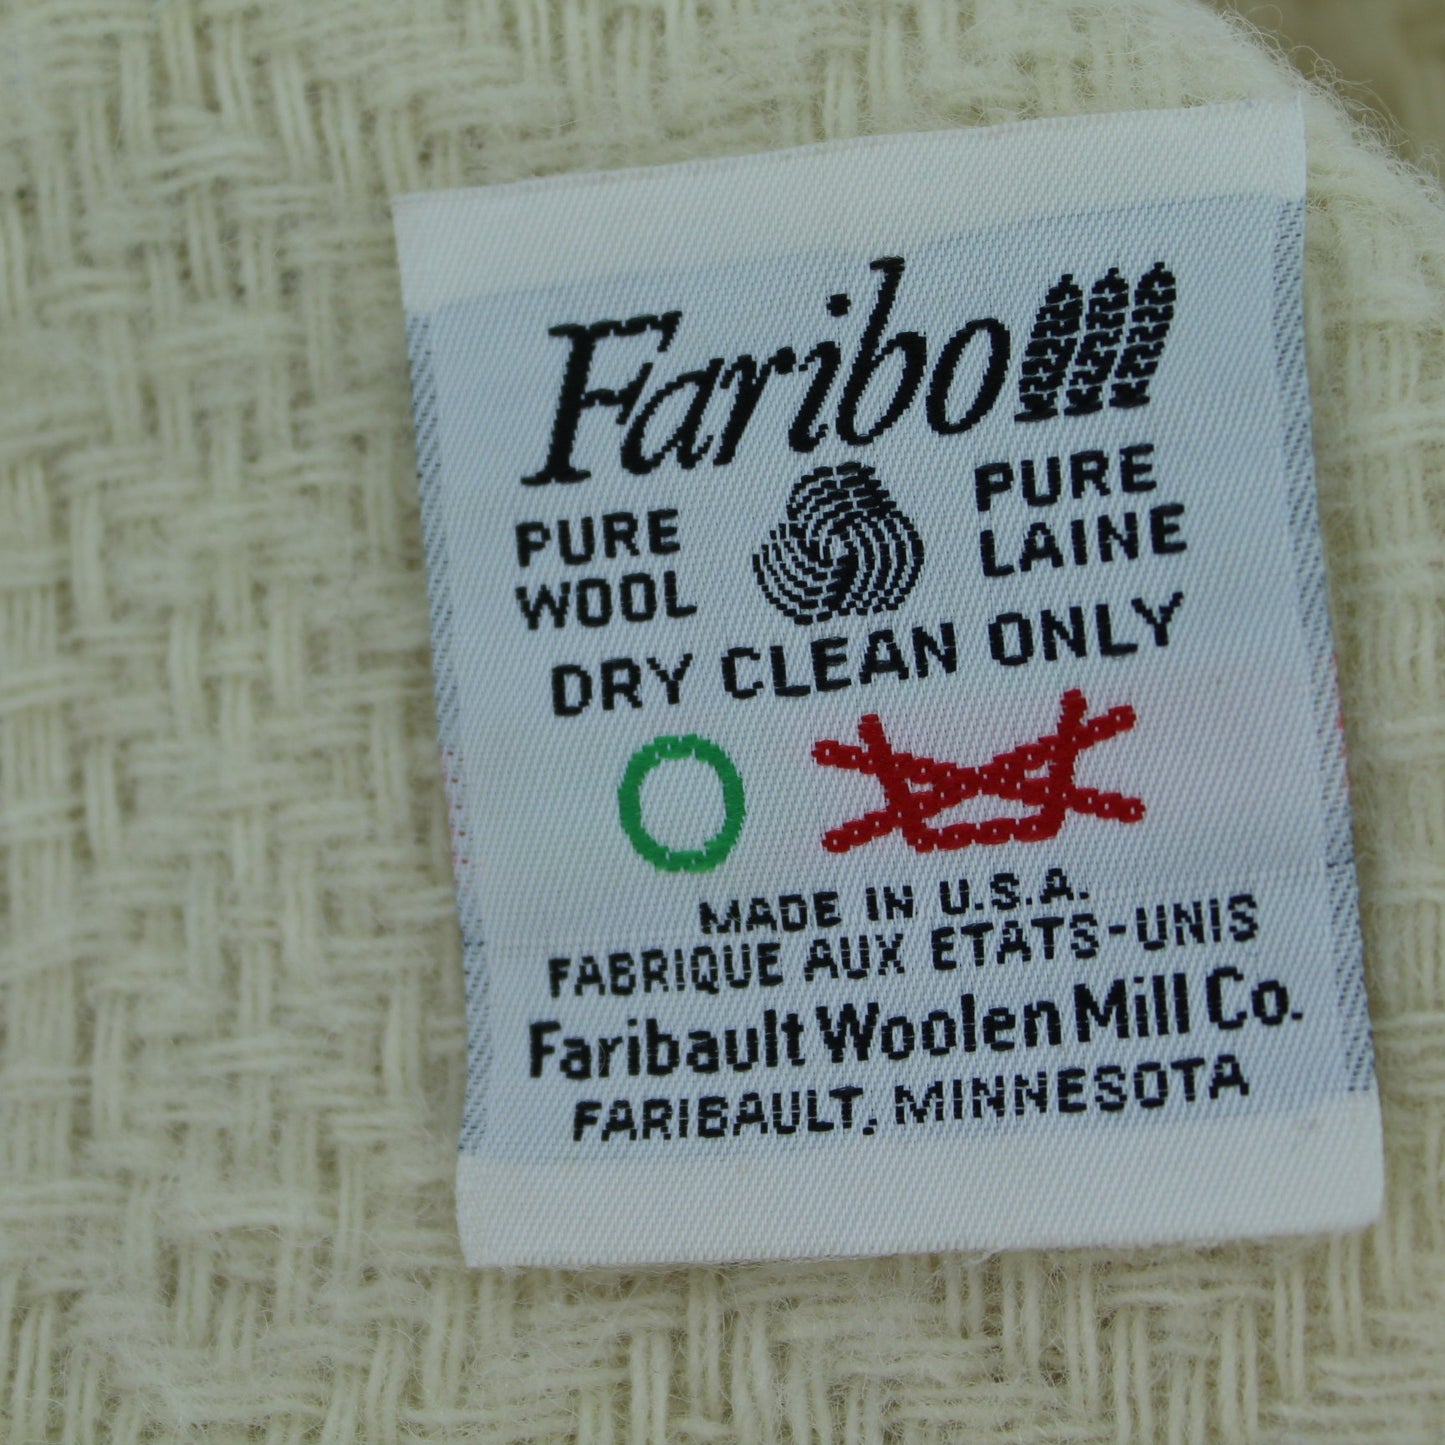 Faribo Wool Throw Ivory Grey Rose Woven Design Special original faribo tag